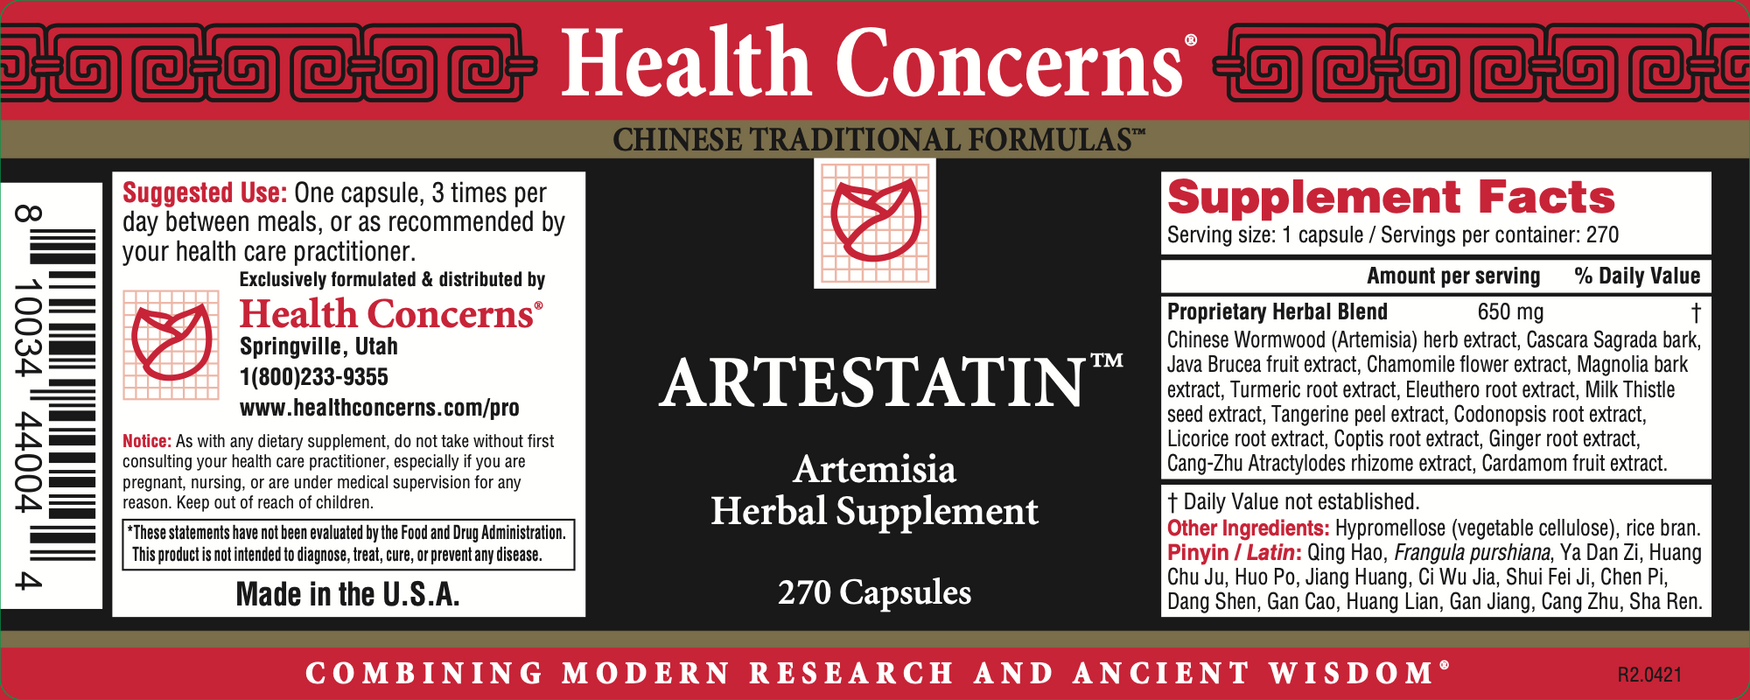 Health Concerns - Artestatin (270 Capsules) - 